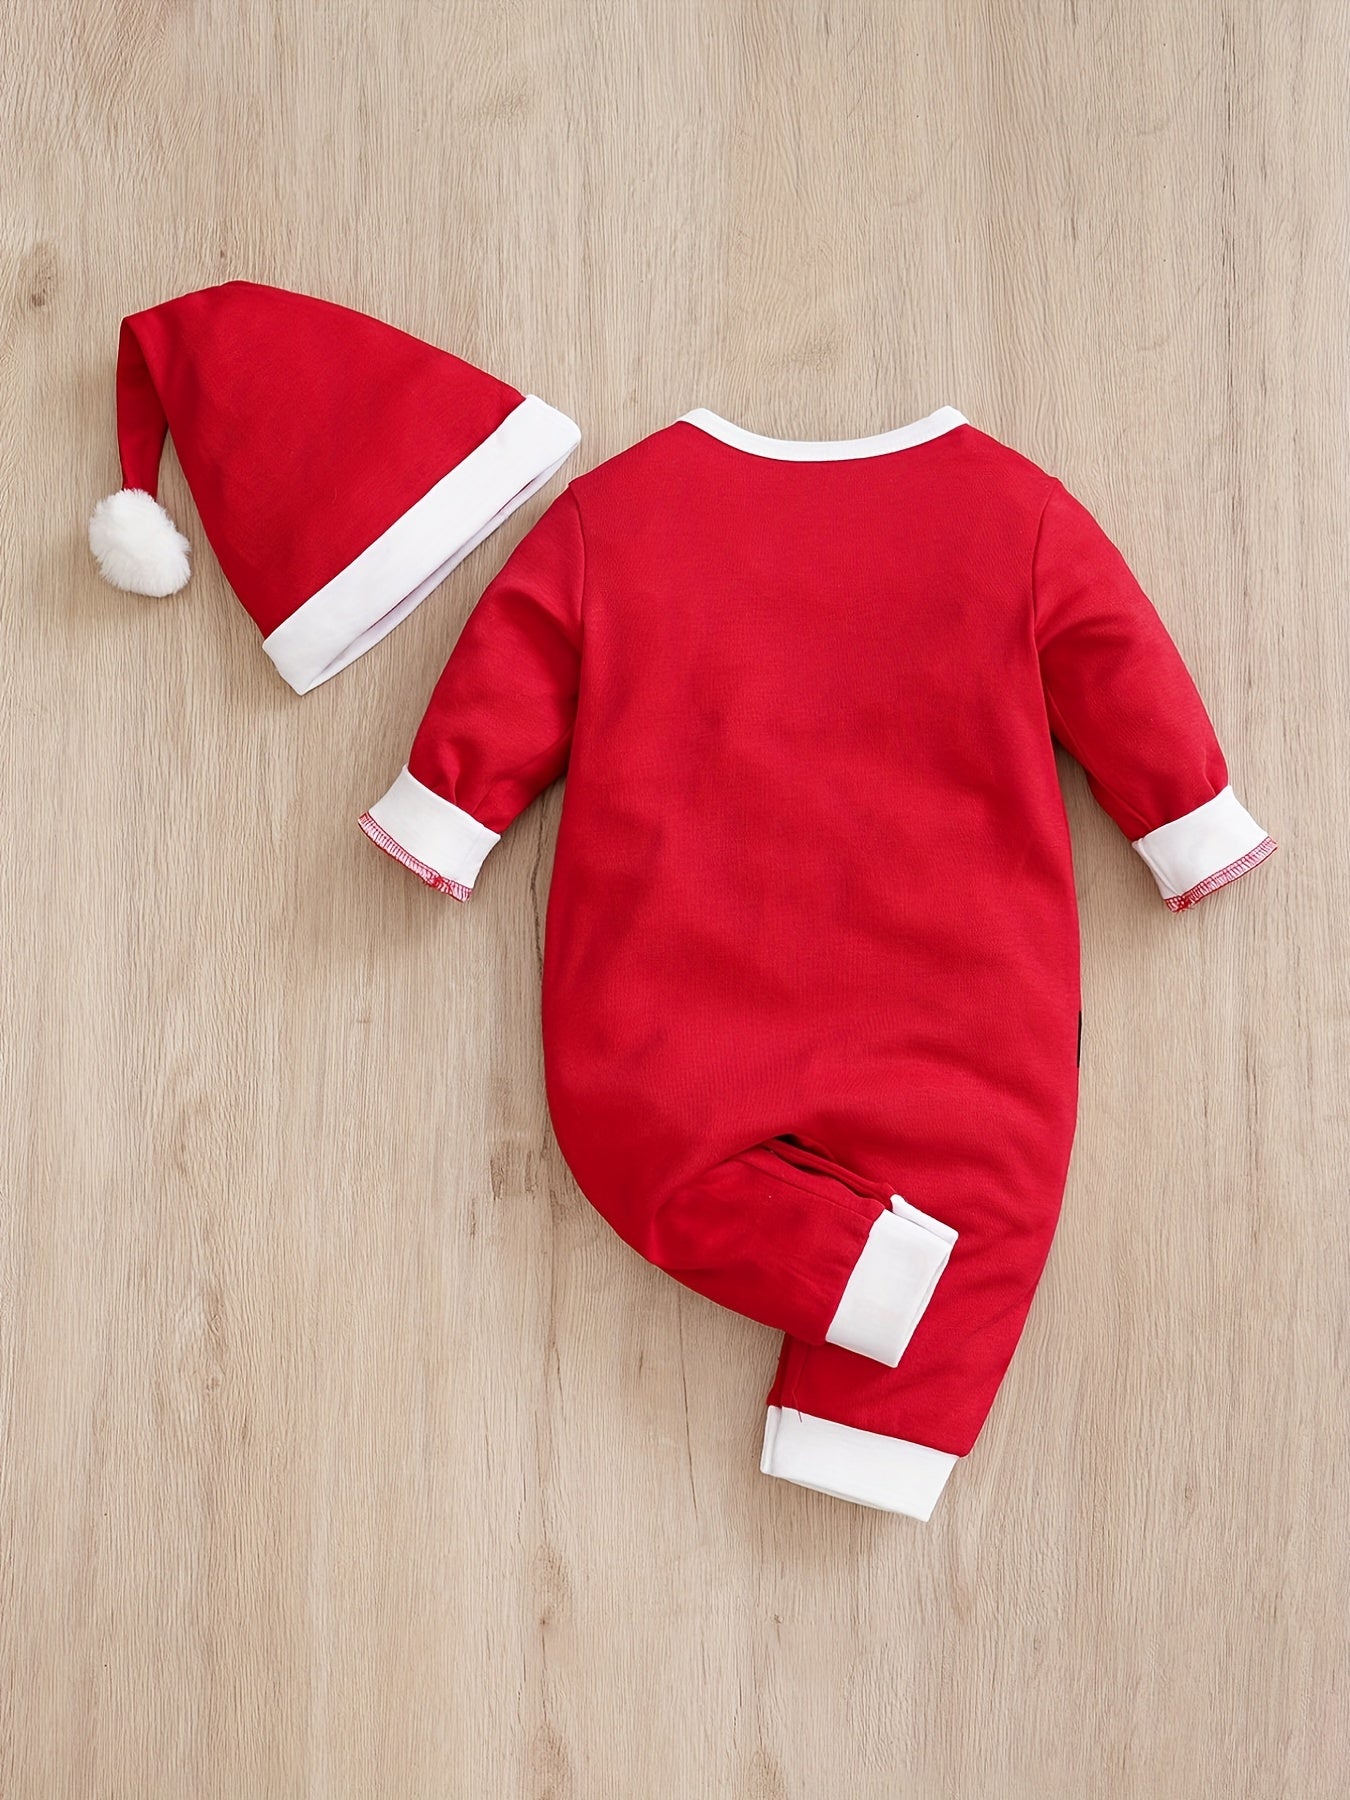 Cute Christmas Costumes - Santa Claus Pattern Long Sleeve Cotton Baby Romper + Hat Baby Infant 2pcs Set